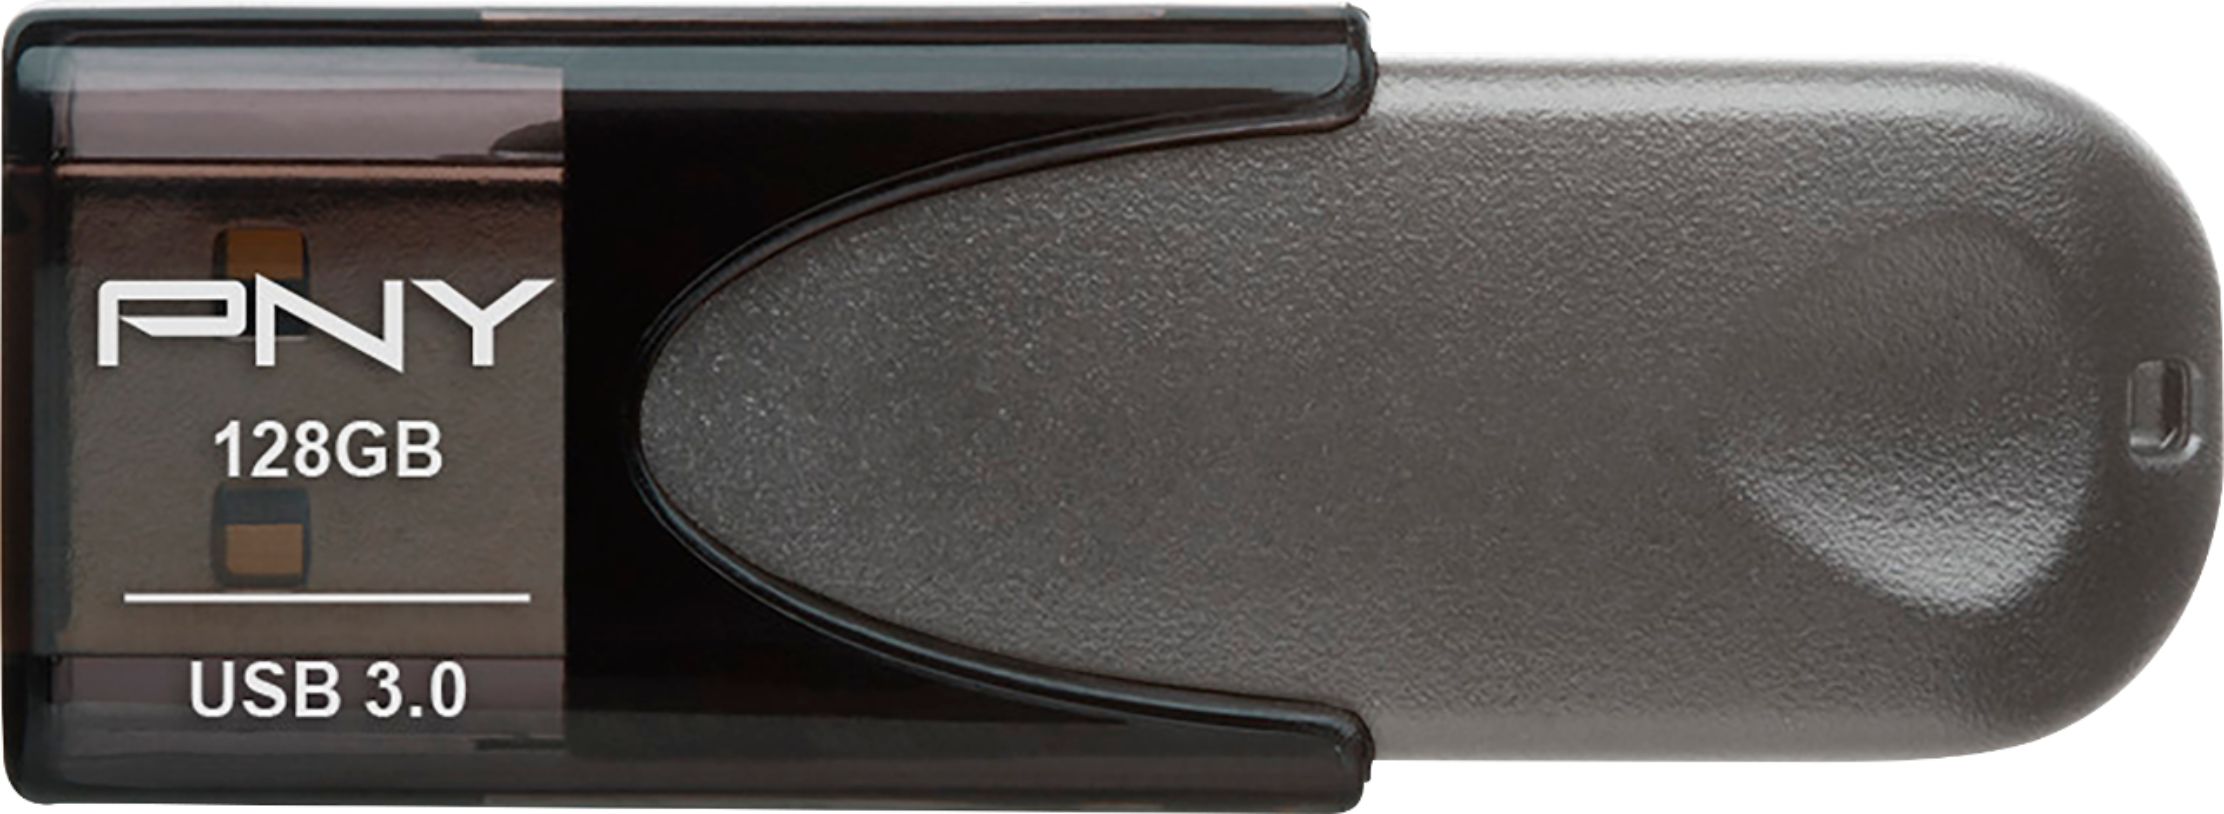 PNY - Elite Turbo Attache 4 128GB USB 3.0 Type A Flash Drive - Black/Gray was $34.99 now $15.99 (54.0% off)